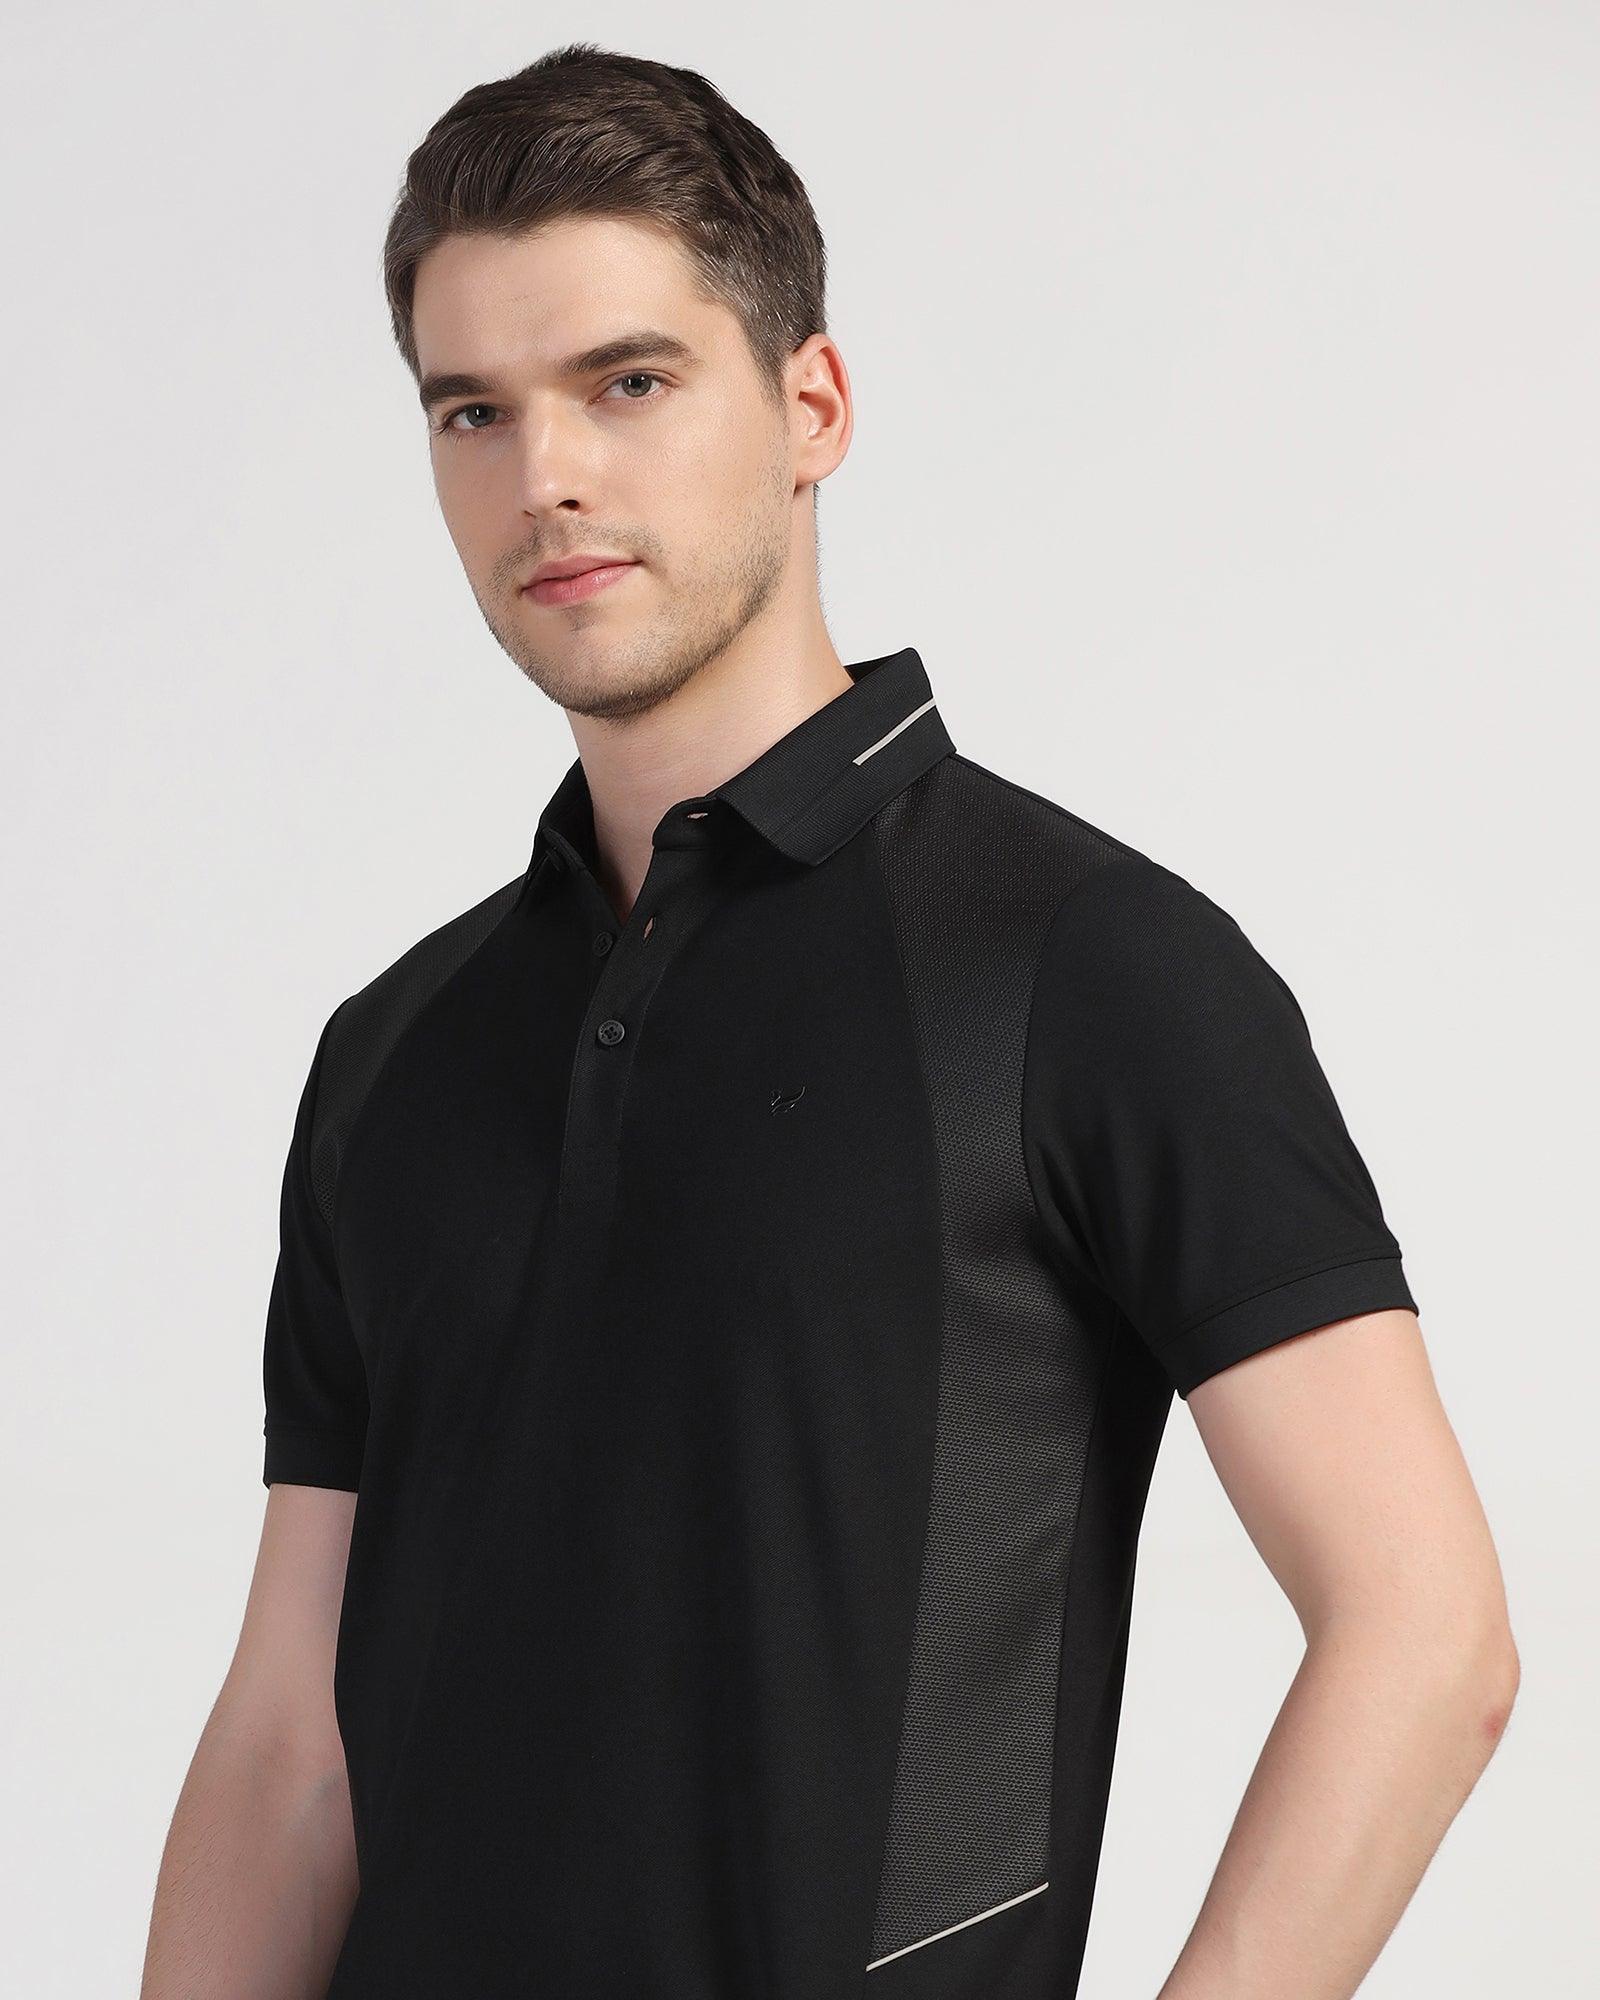 TechPro Polo Black Solid T-Shirt - Weber